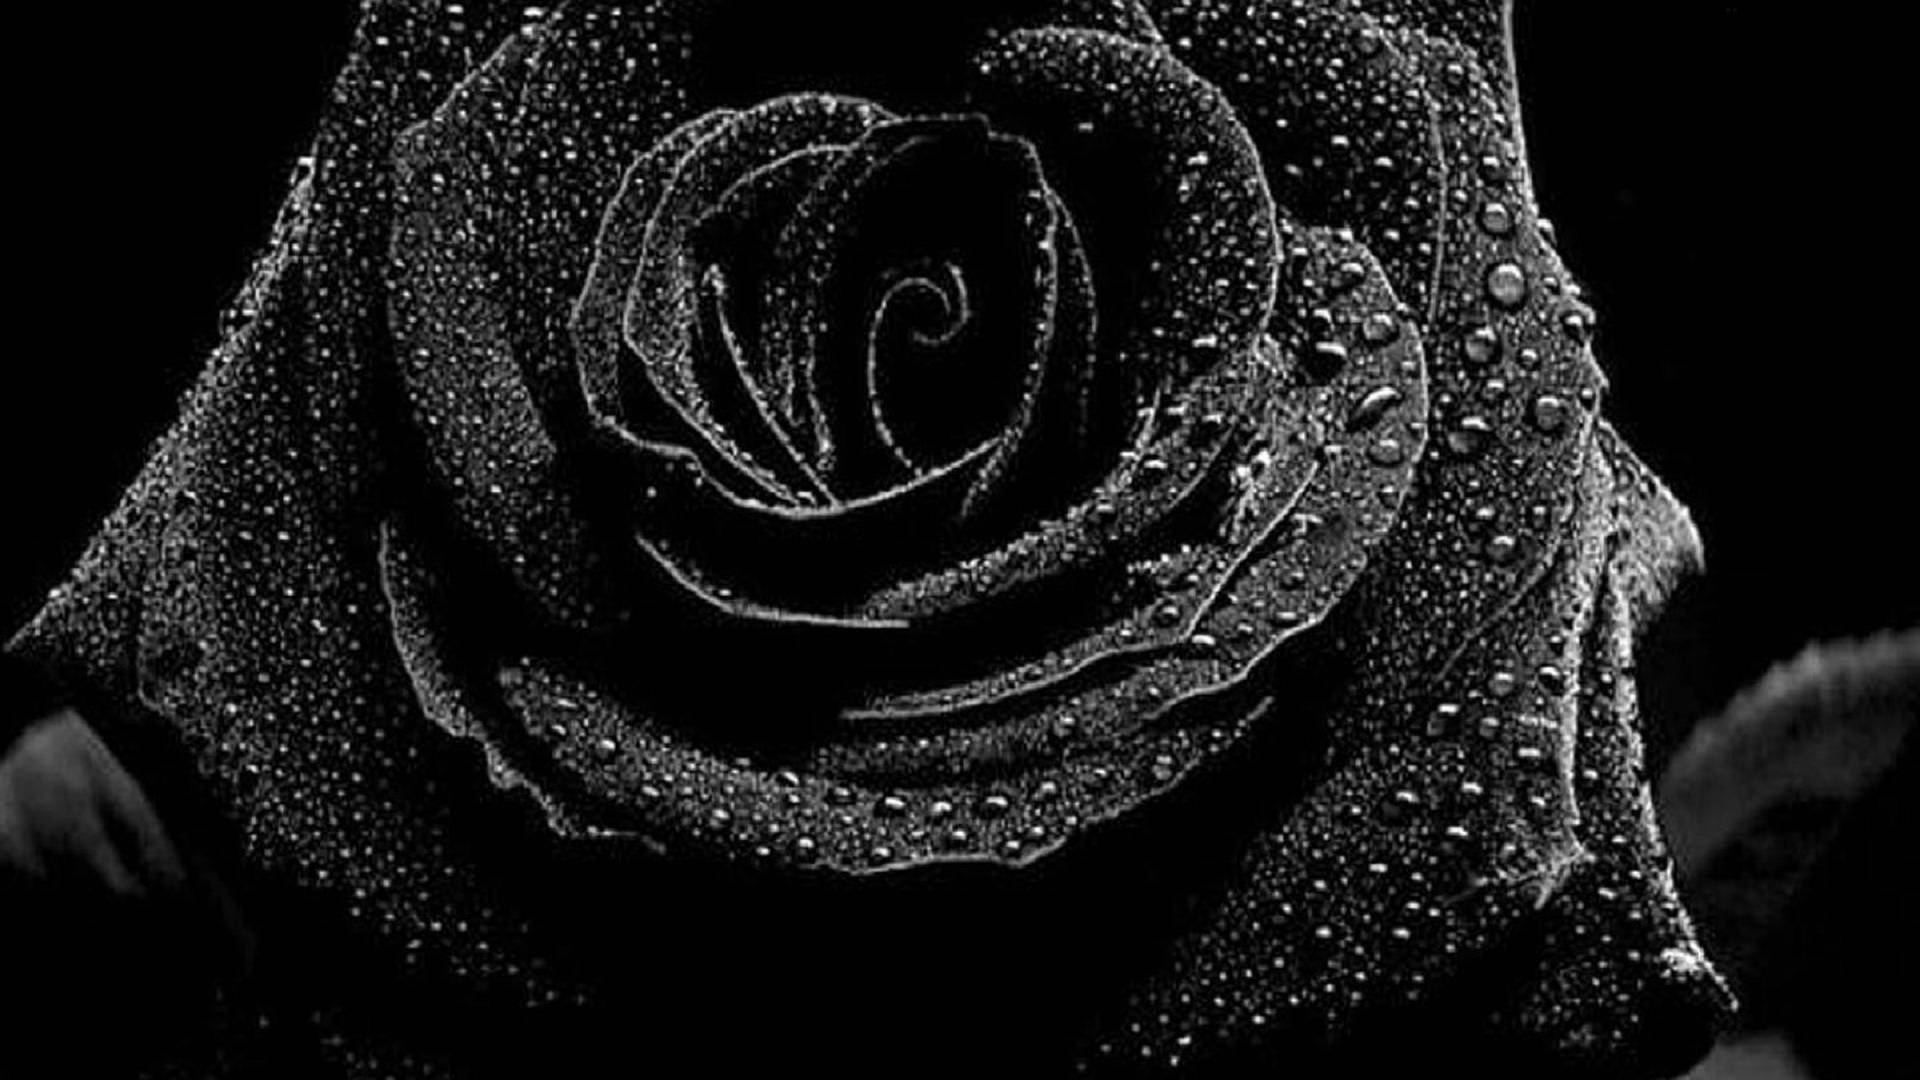 Black Rose Hd Wallpaper For Mobile  Black Rose Wallpaper Hd For Mobile HD  Wallpaper  Backgrounds  Black rose flower Black roses wallpaper Black  flowers